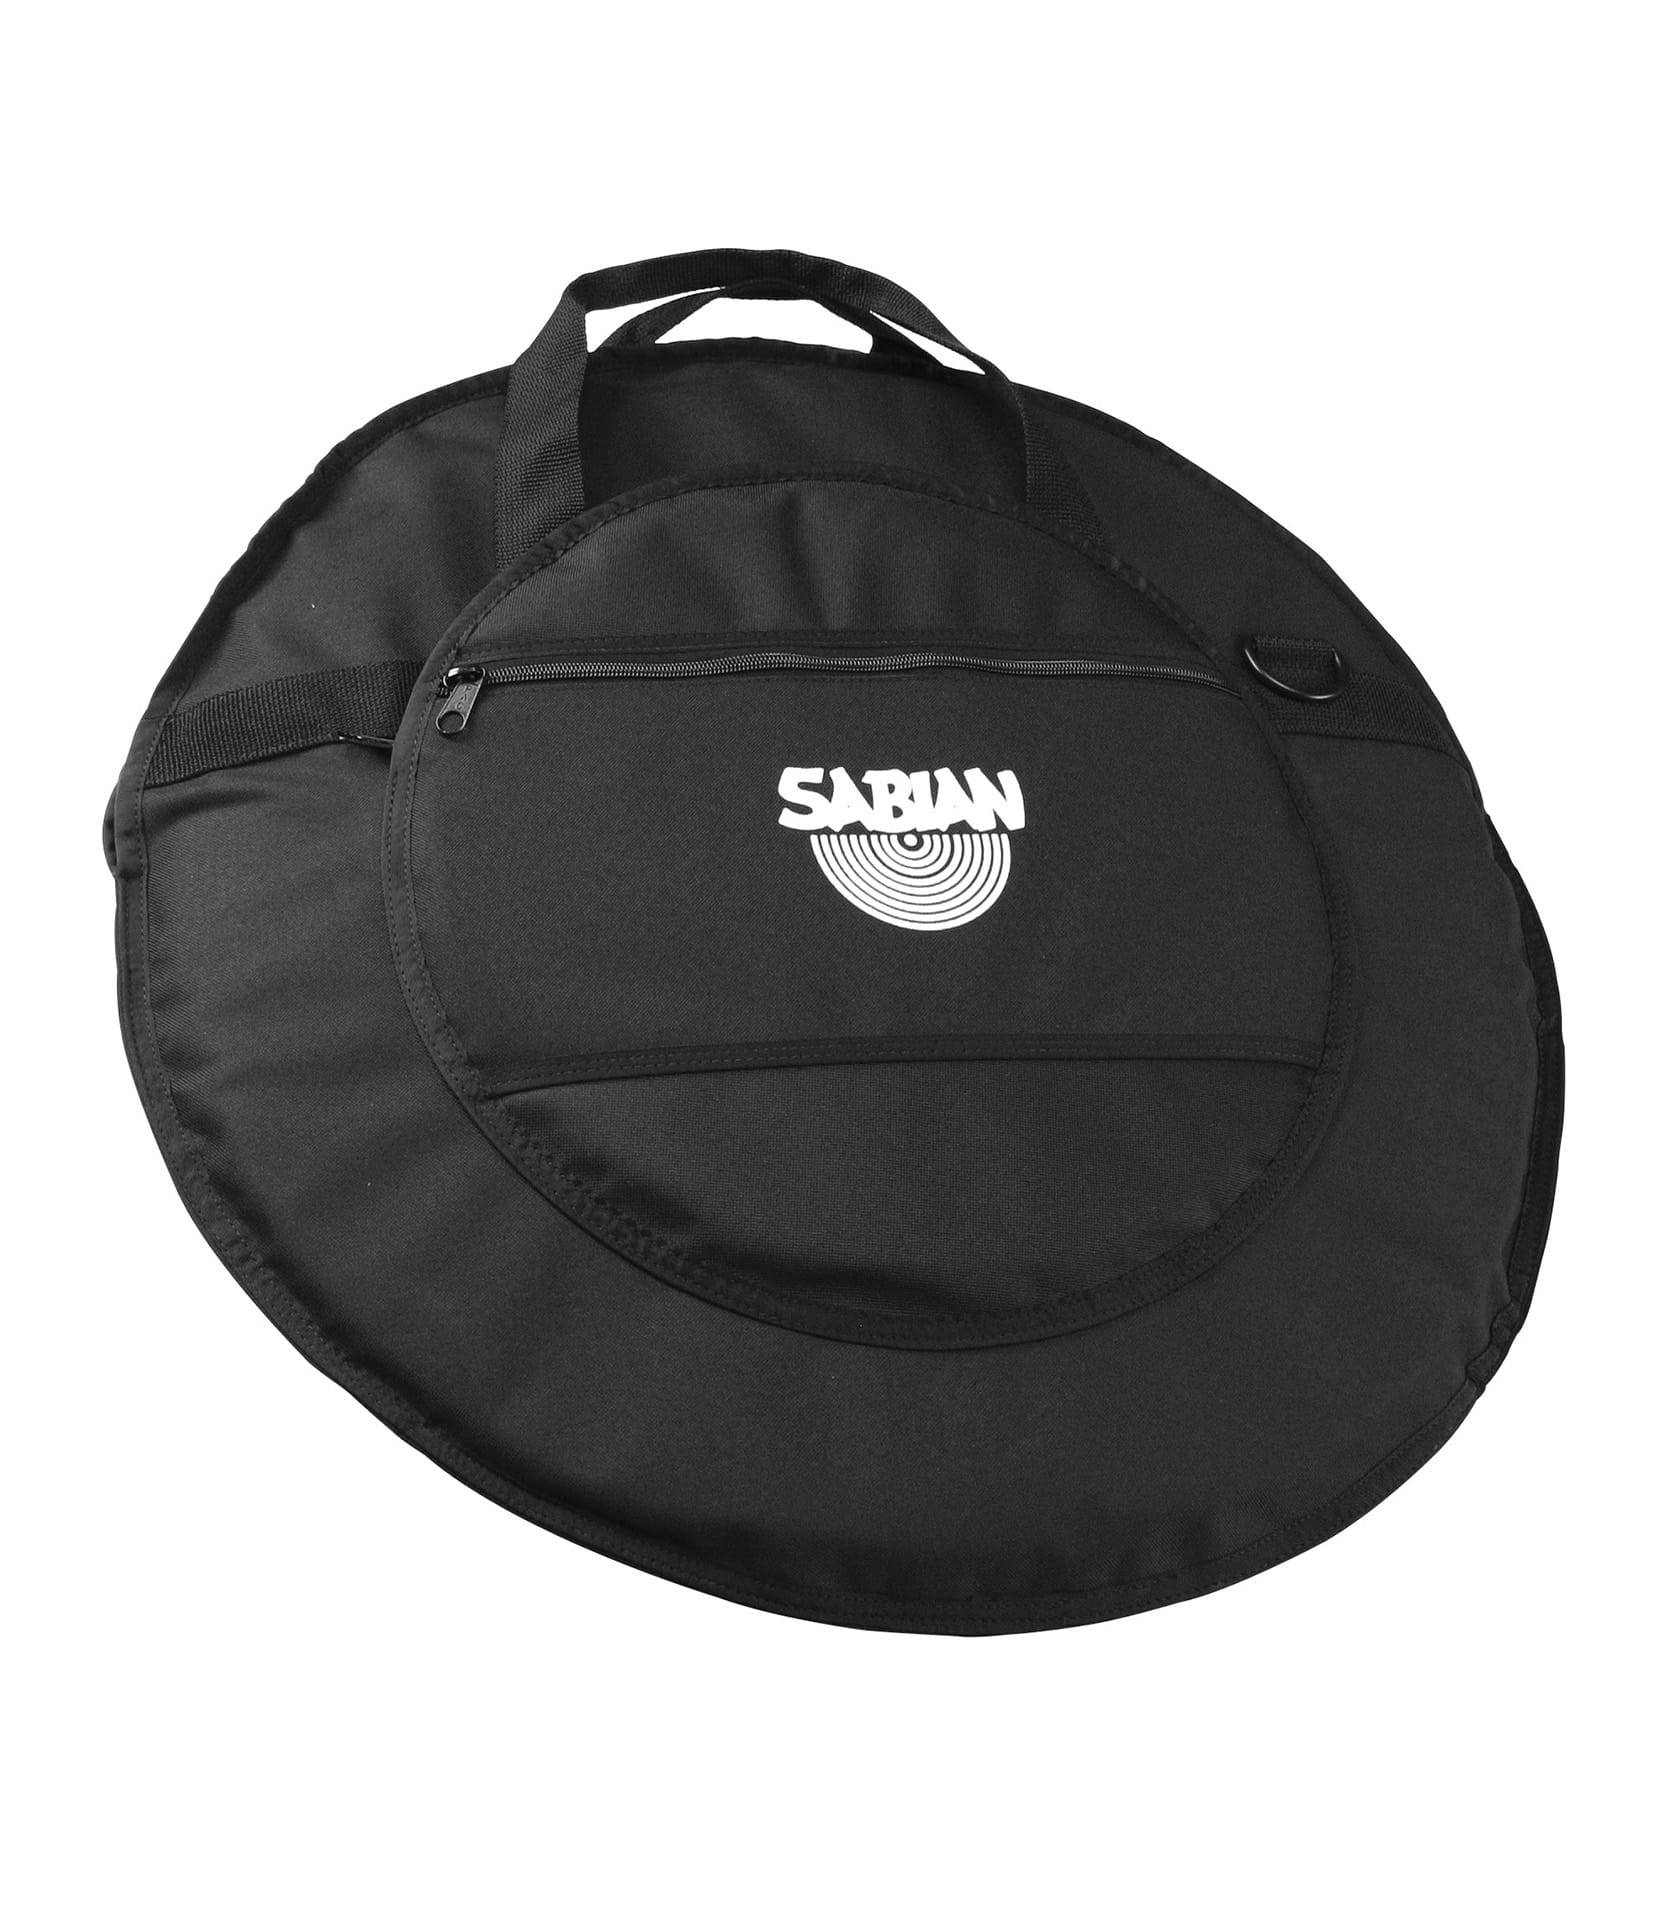 buy sabian 22 inch standard foam padded cymbal bag